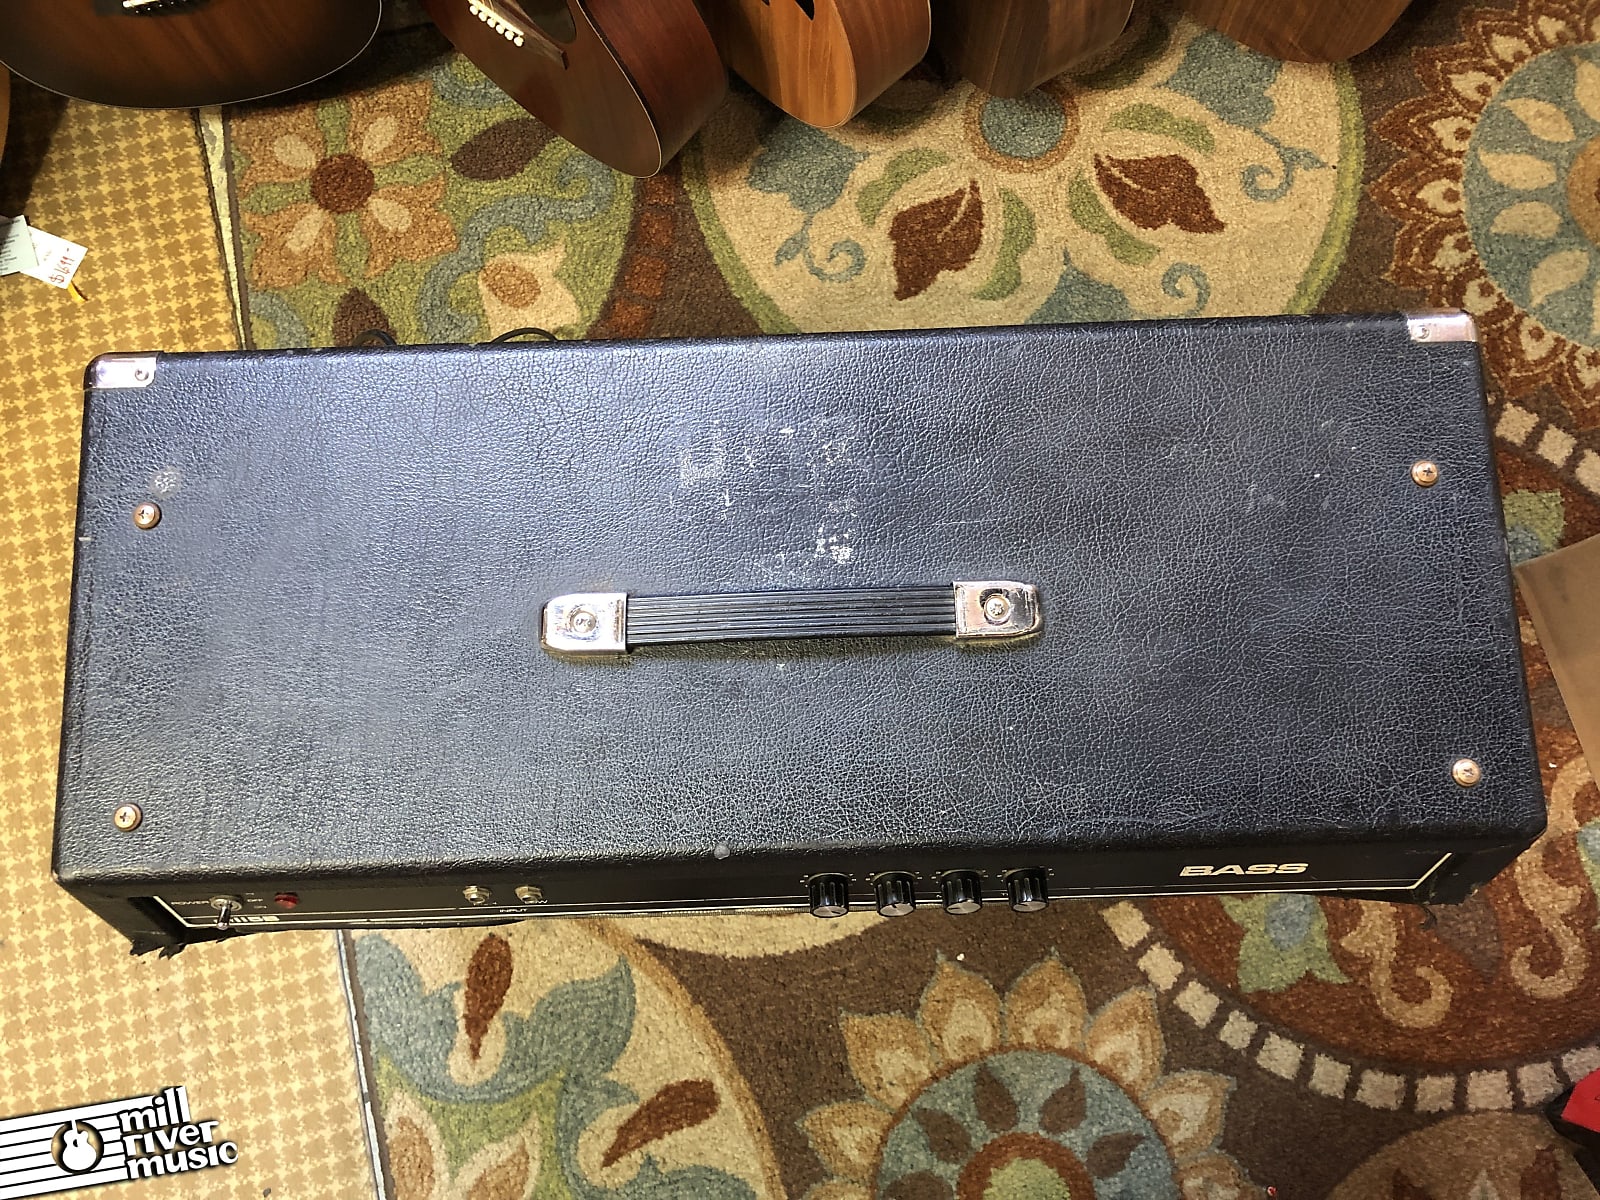 Yamaha Fifty 115B Bass Combo Vintage